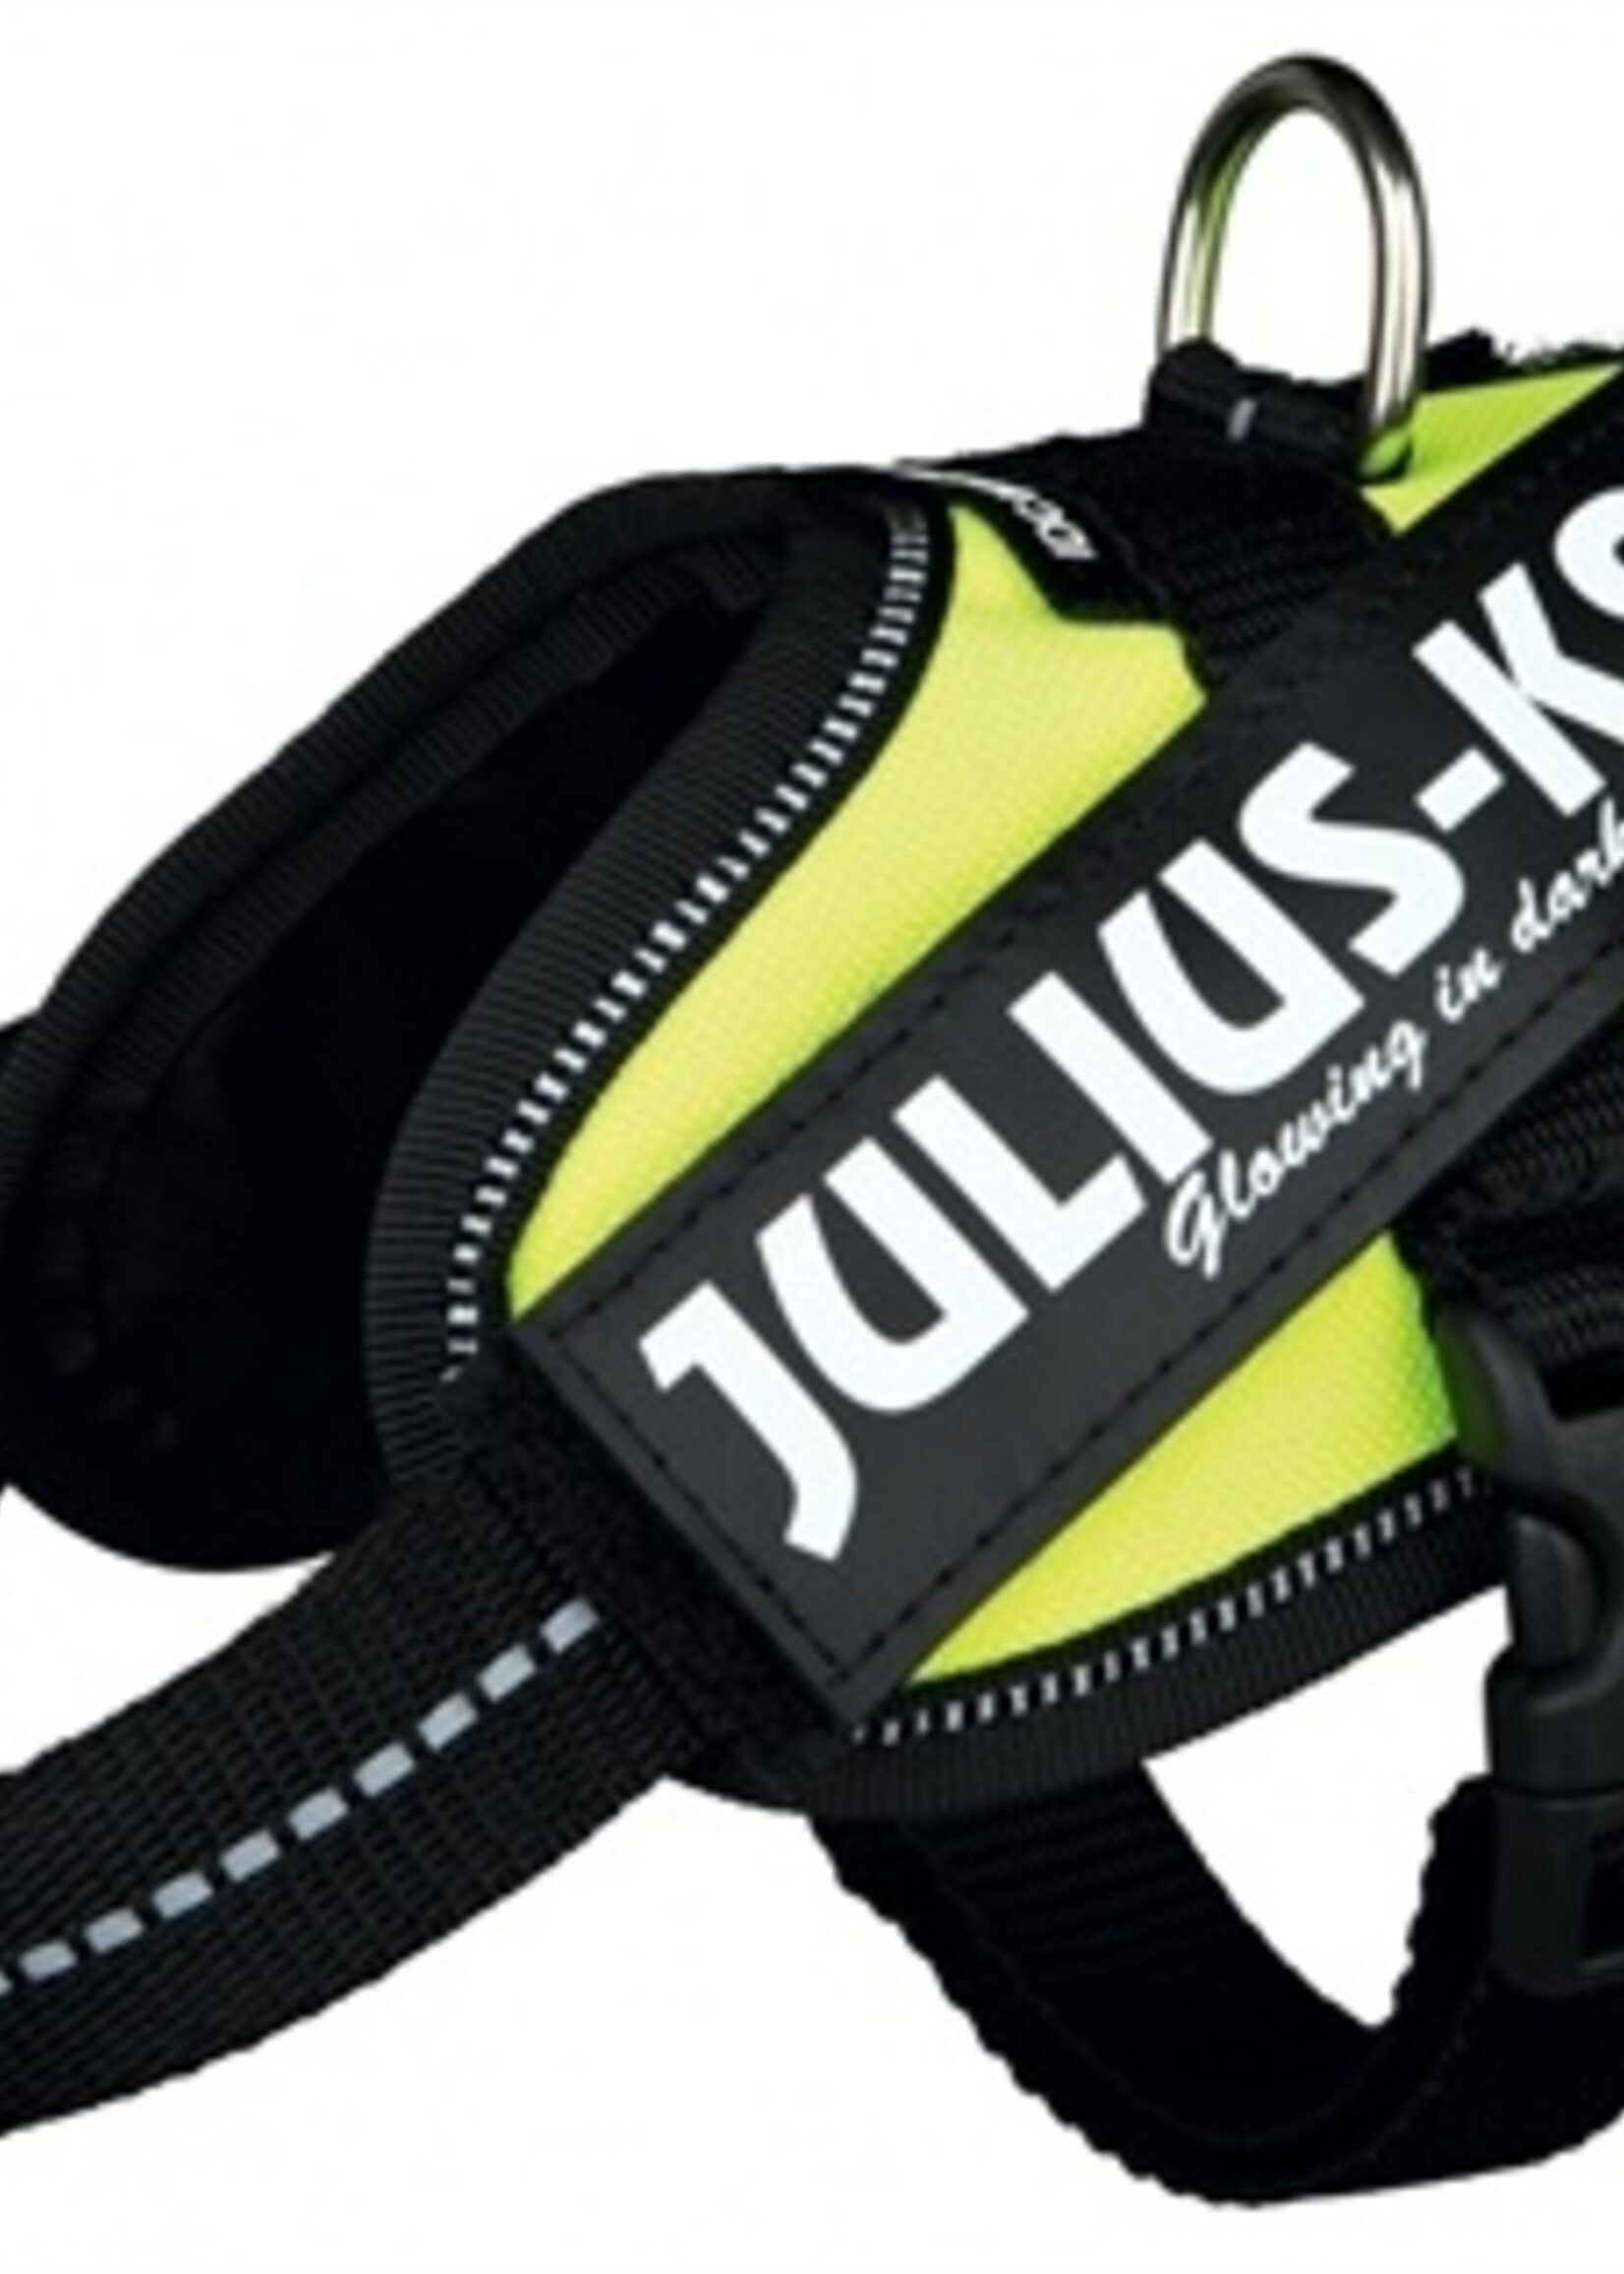 Julius k9 Julius k9 idc harnas / tuig neon groen